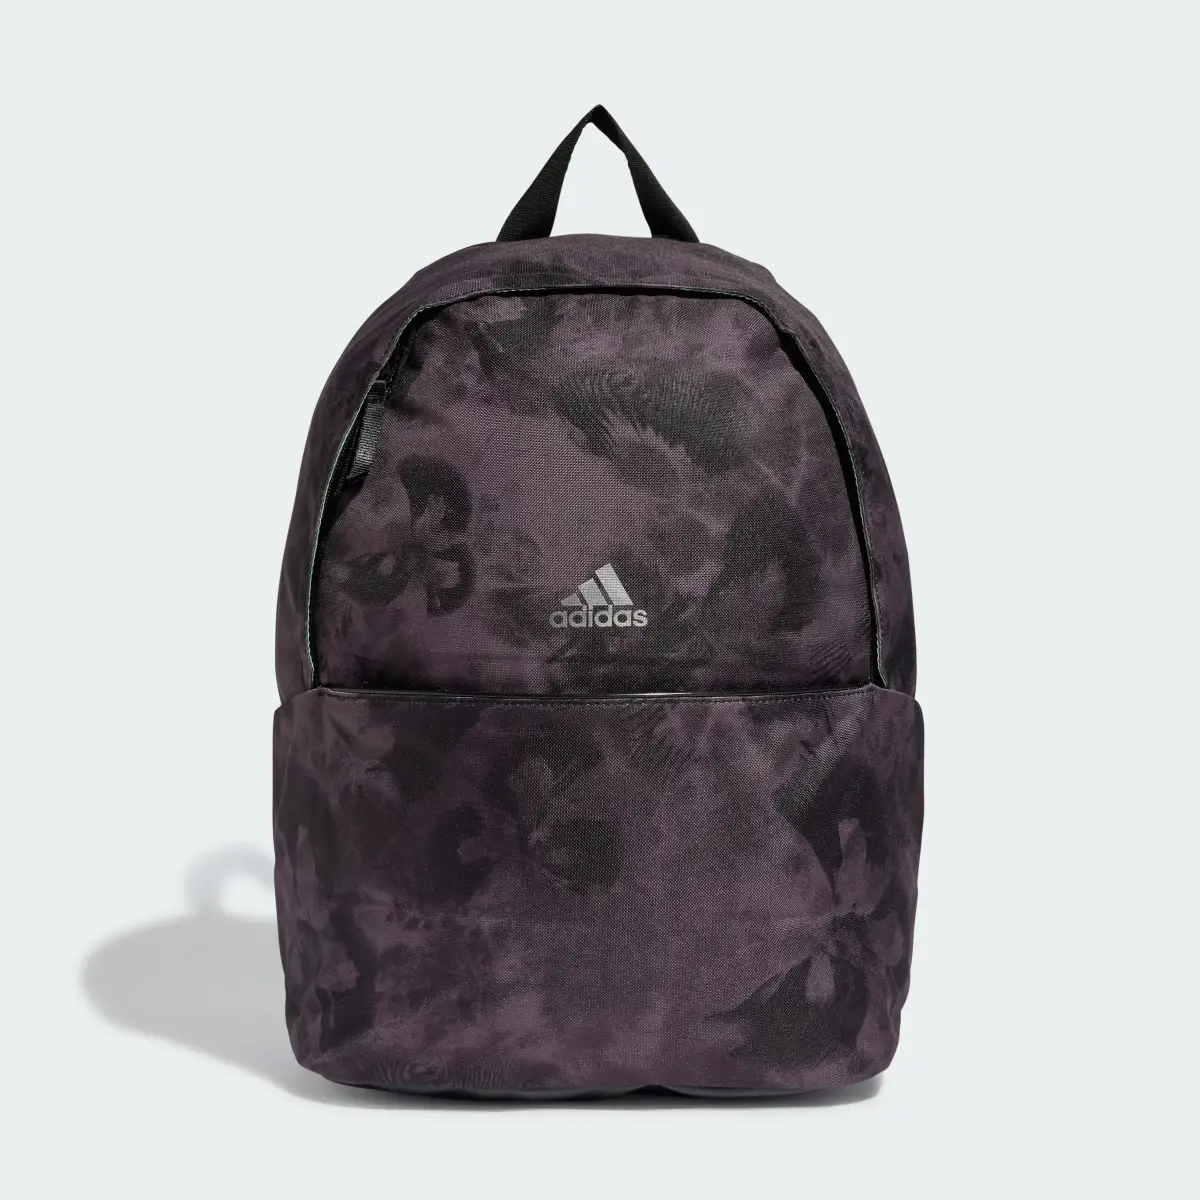 Adidas Gym Backpack. 2